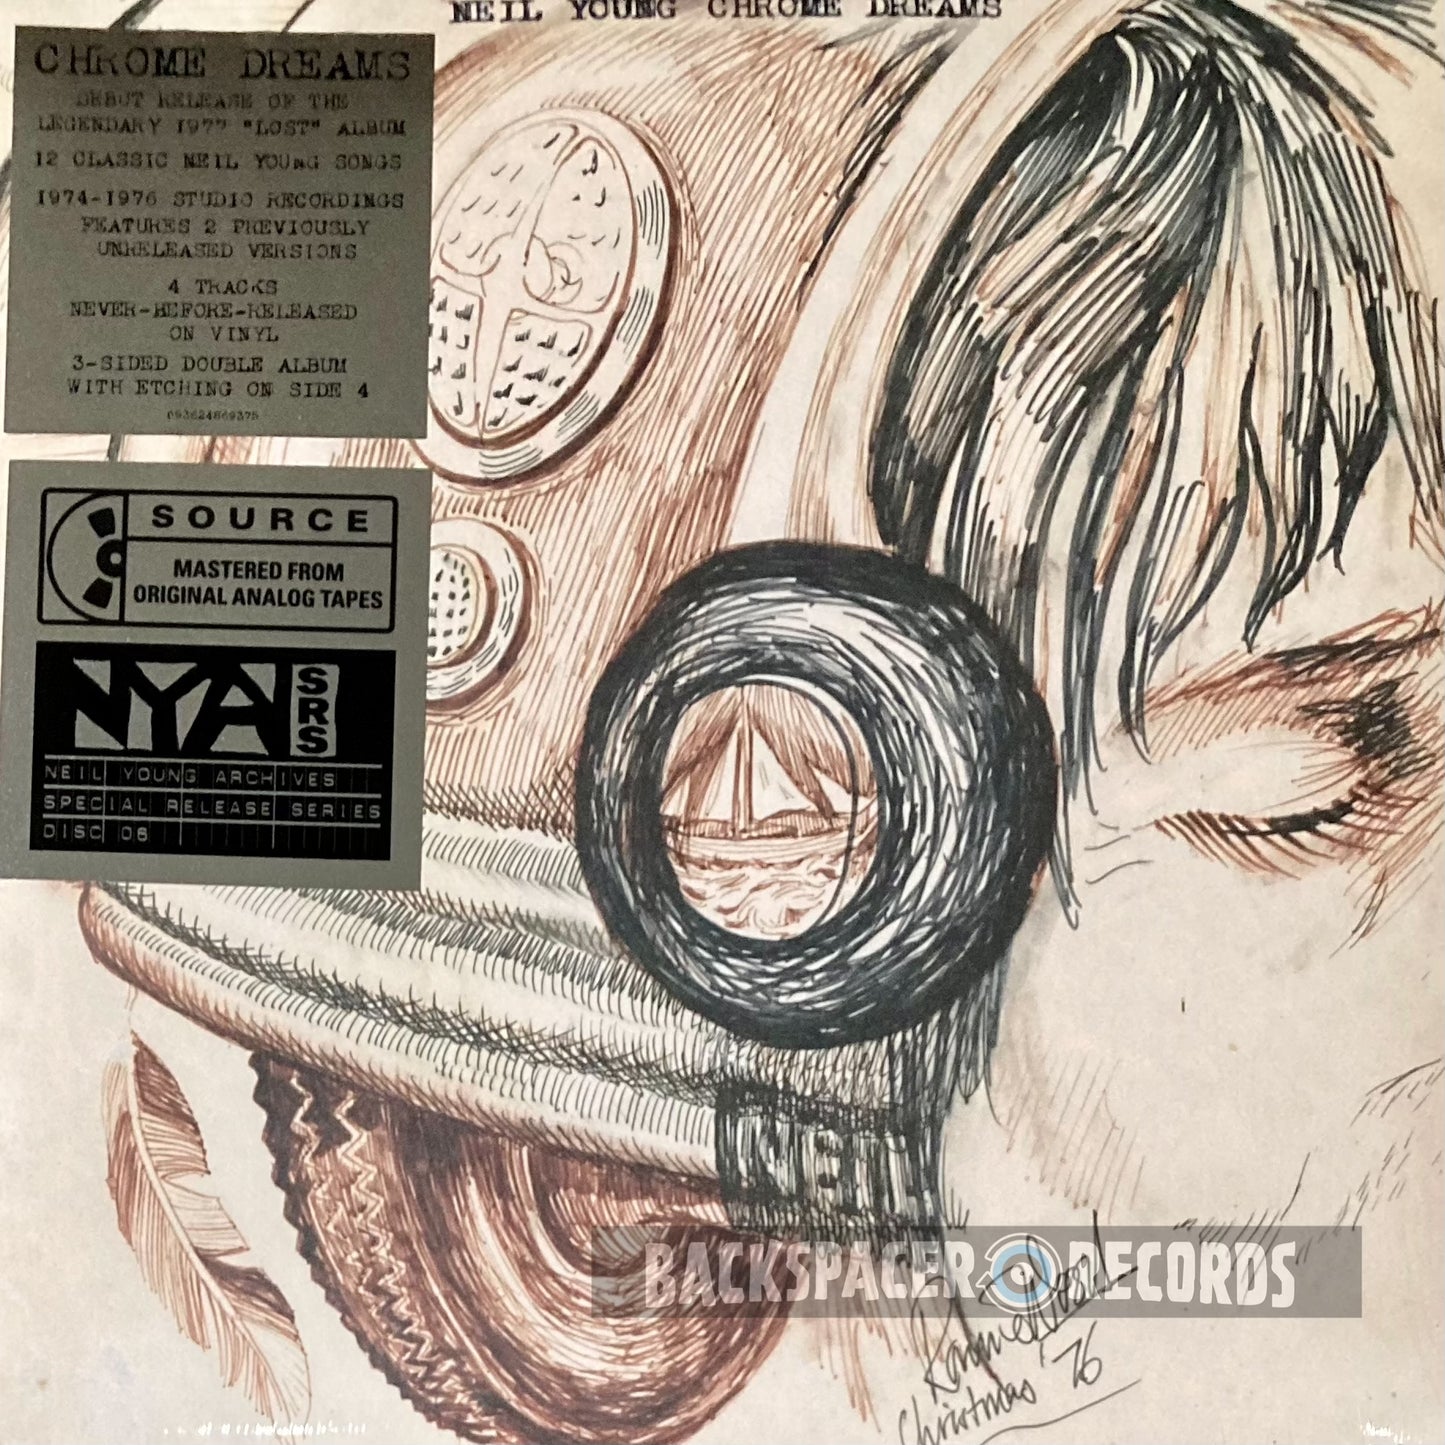 Neil Young - Chrome Dreams 2-LP (Sealed)